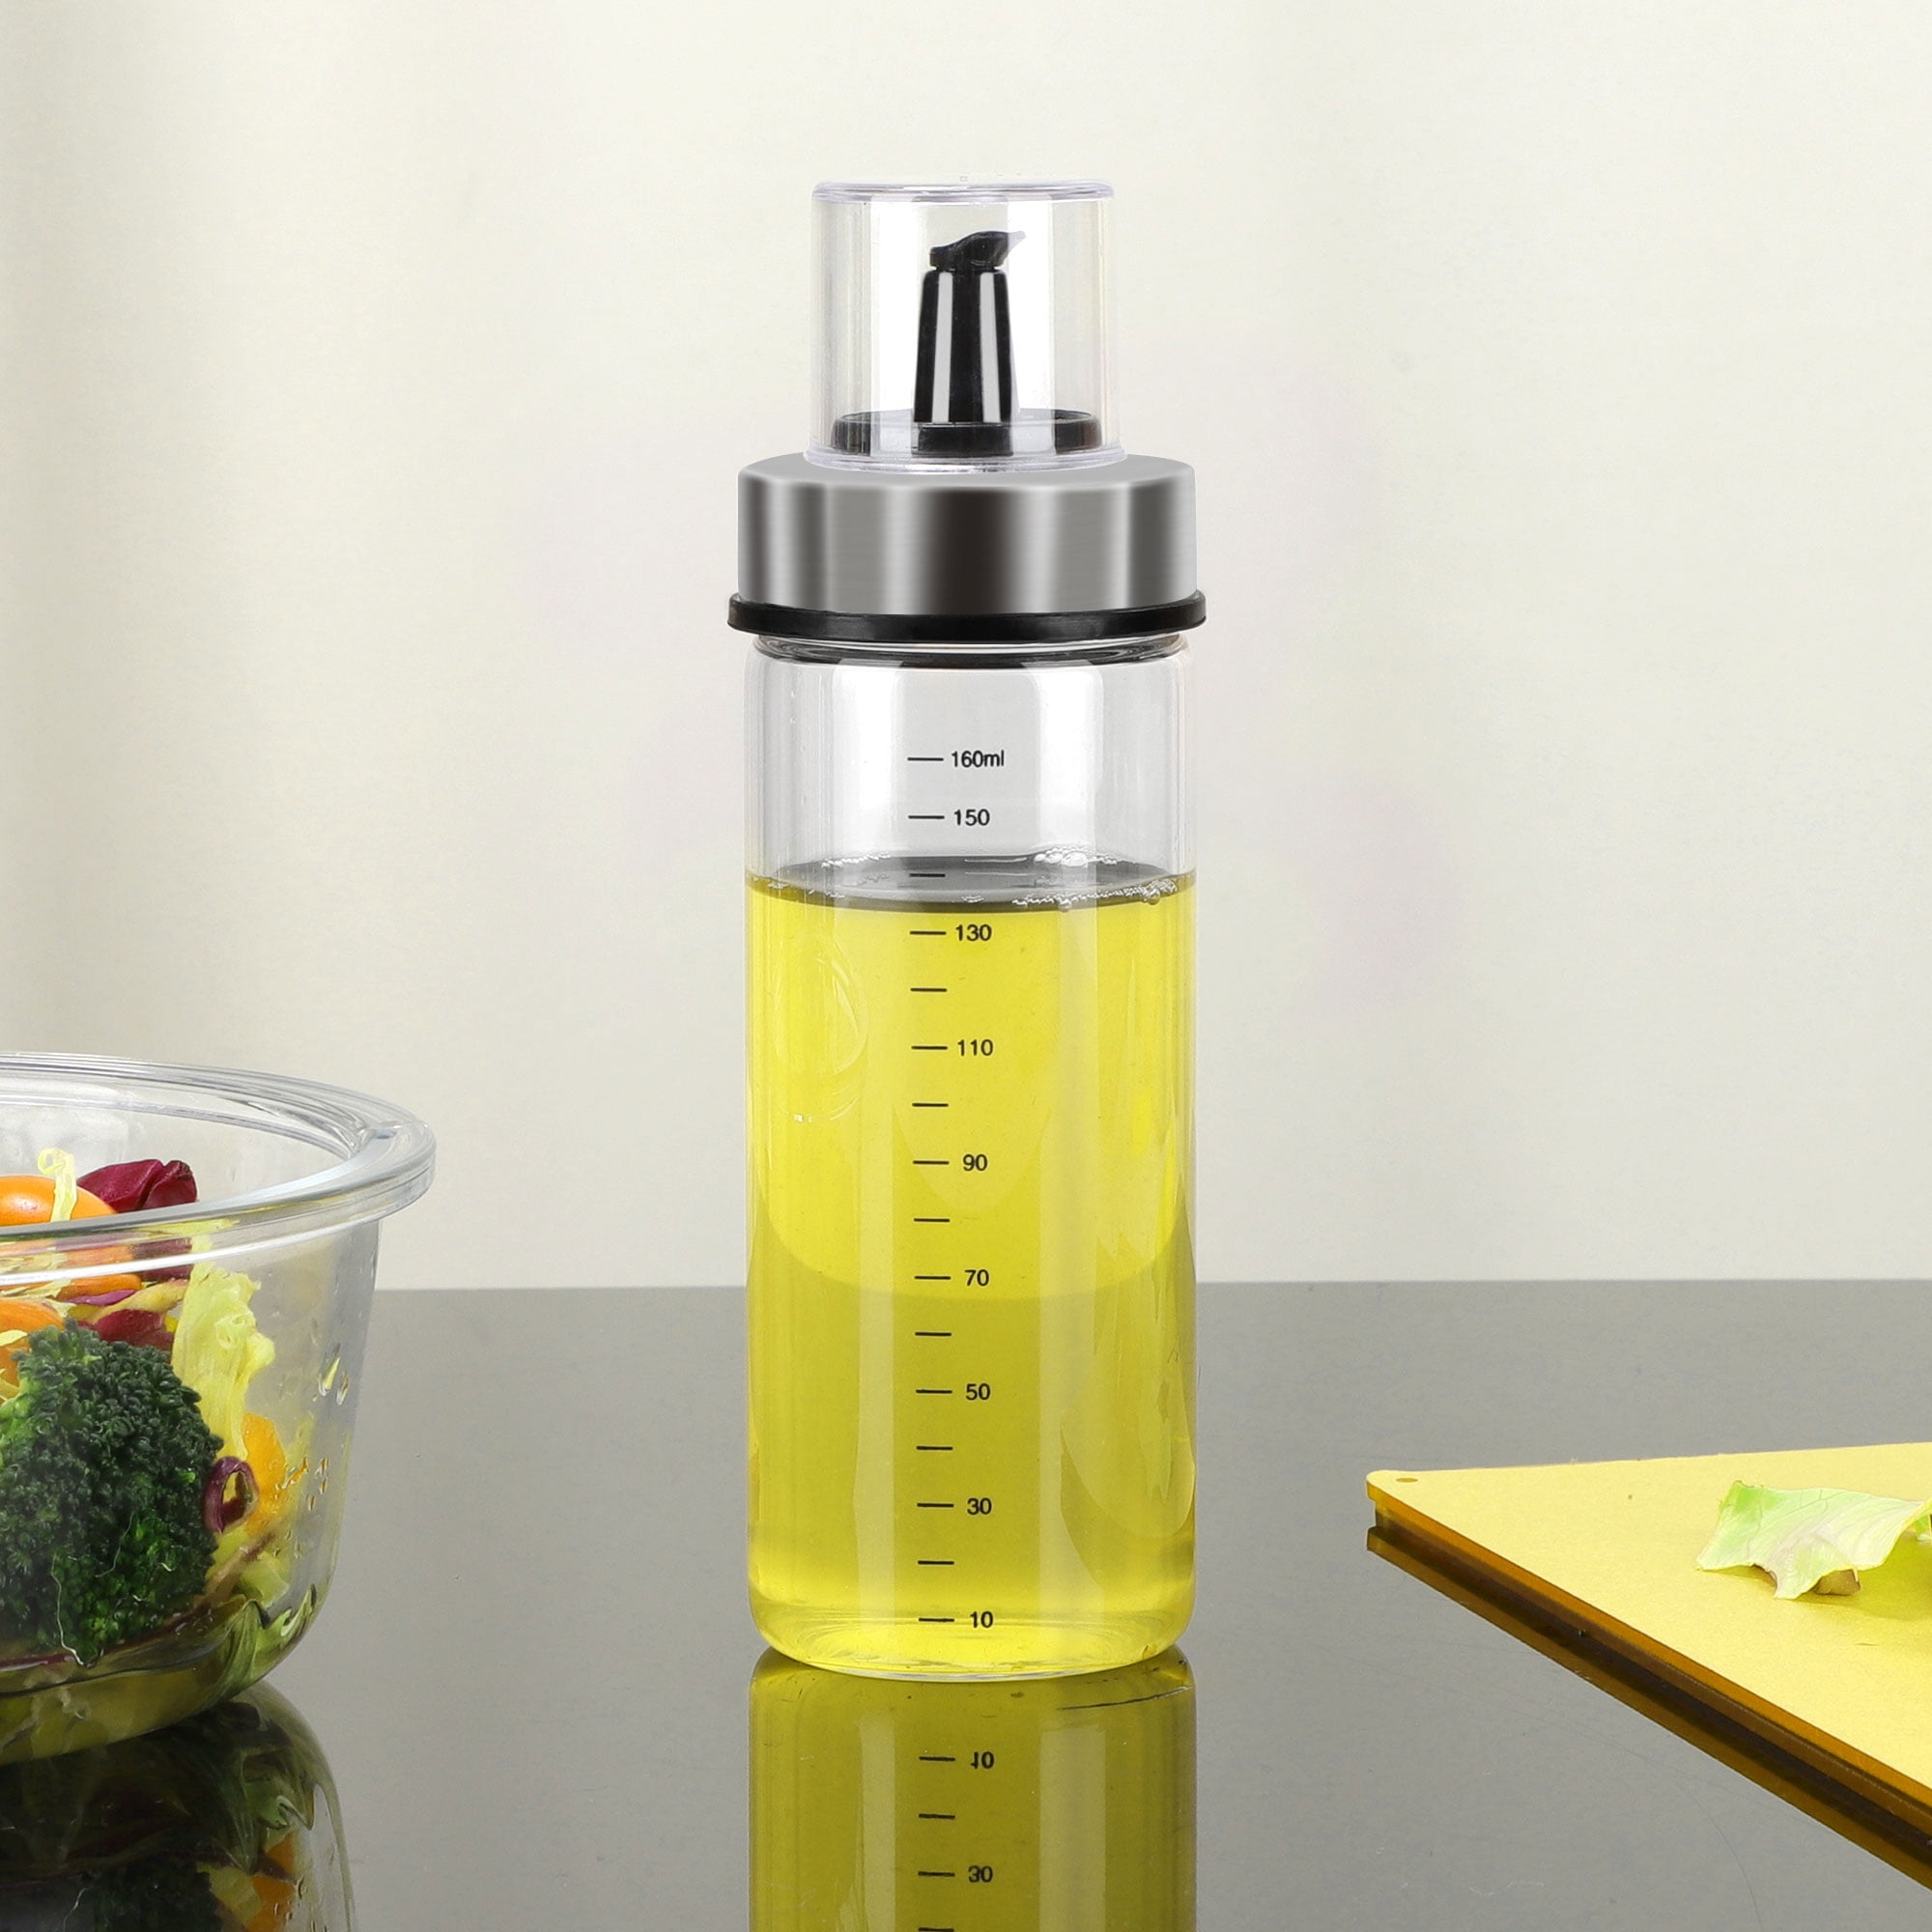 Black B Olive Oil Dispenser Bottle 300ml No Drip Cooking Dispenser Stainless Steel Pour Spout Oil Container Vegetable Oil Vinegar and Pourer